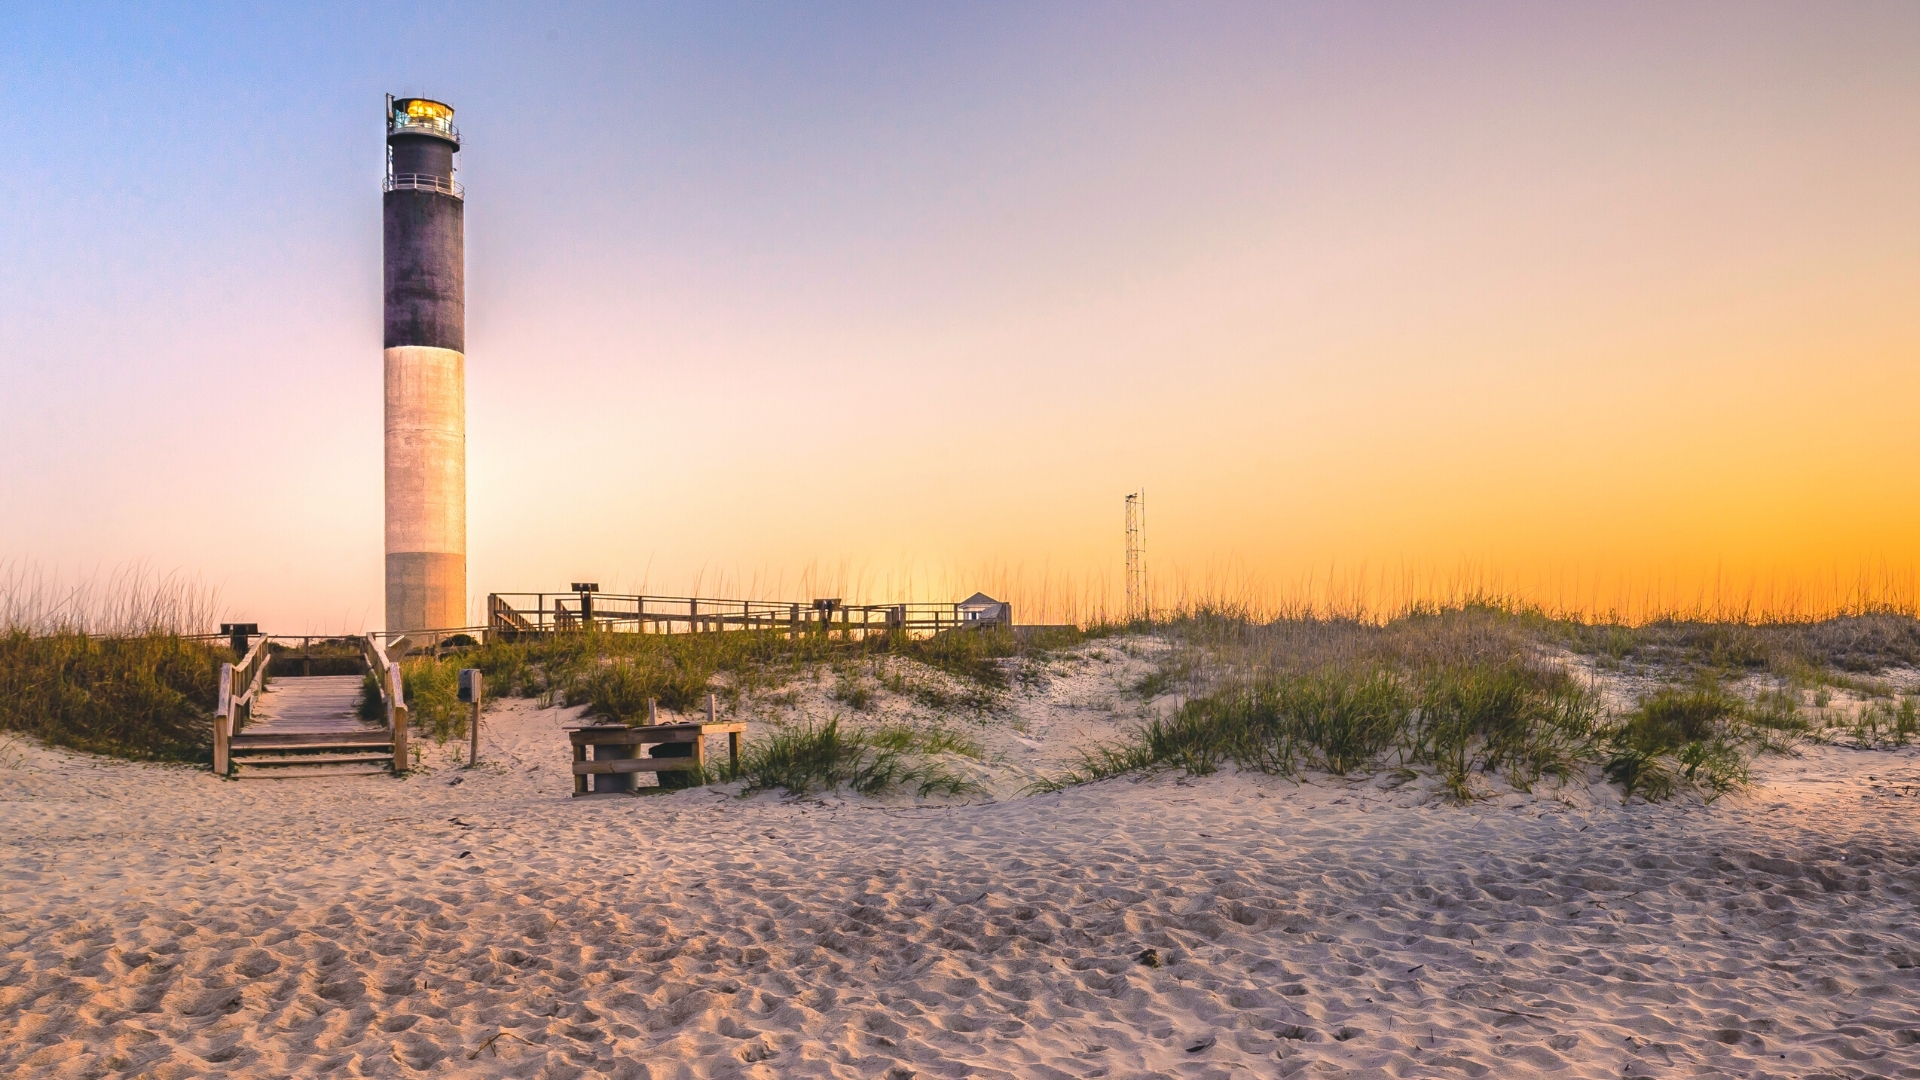 Oak Island Lighthouse from the Beach